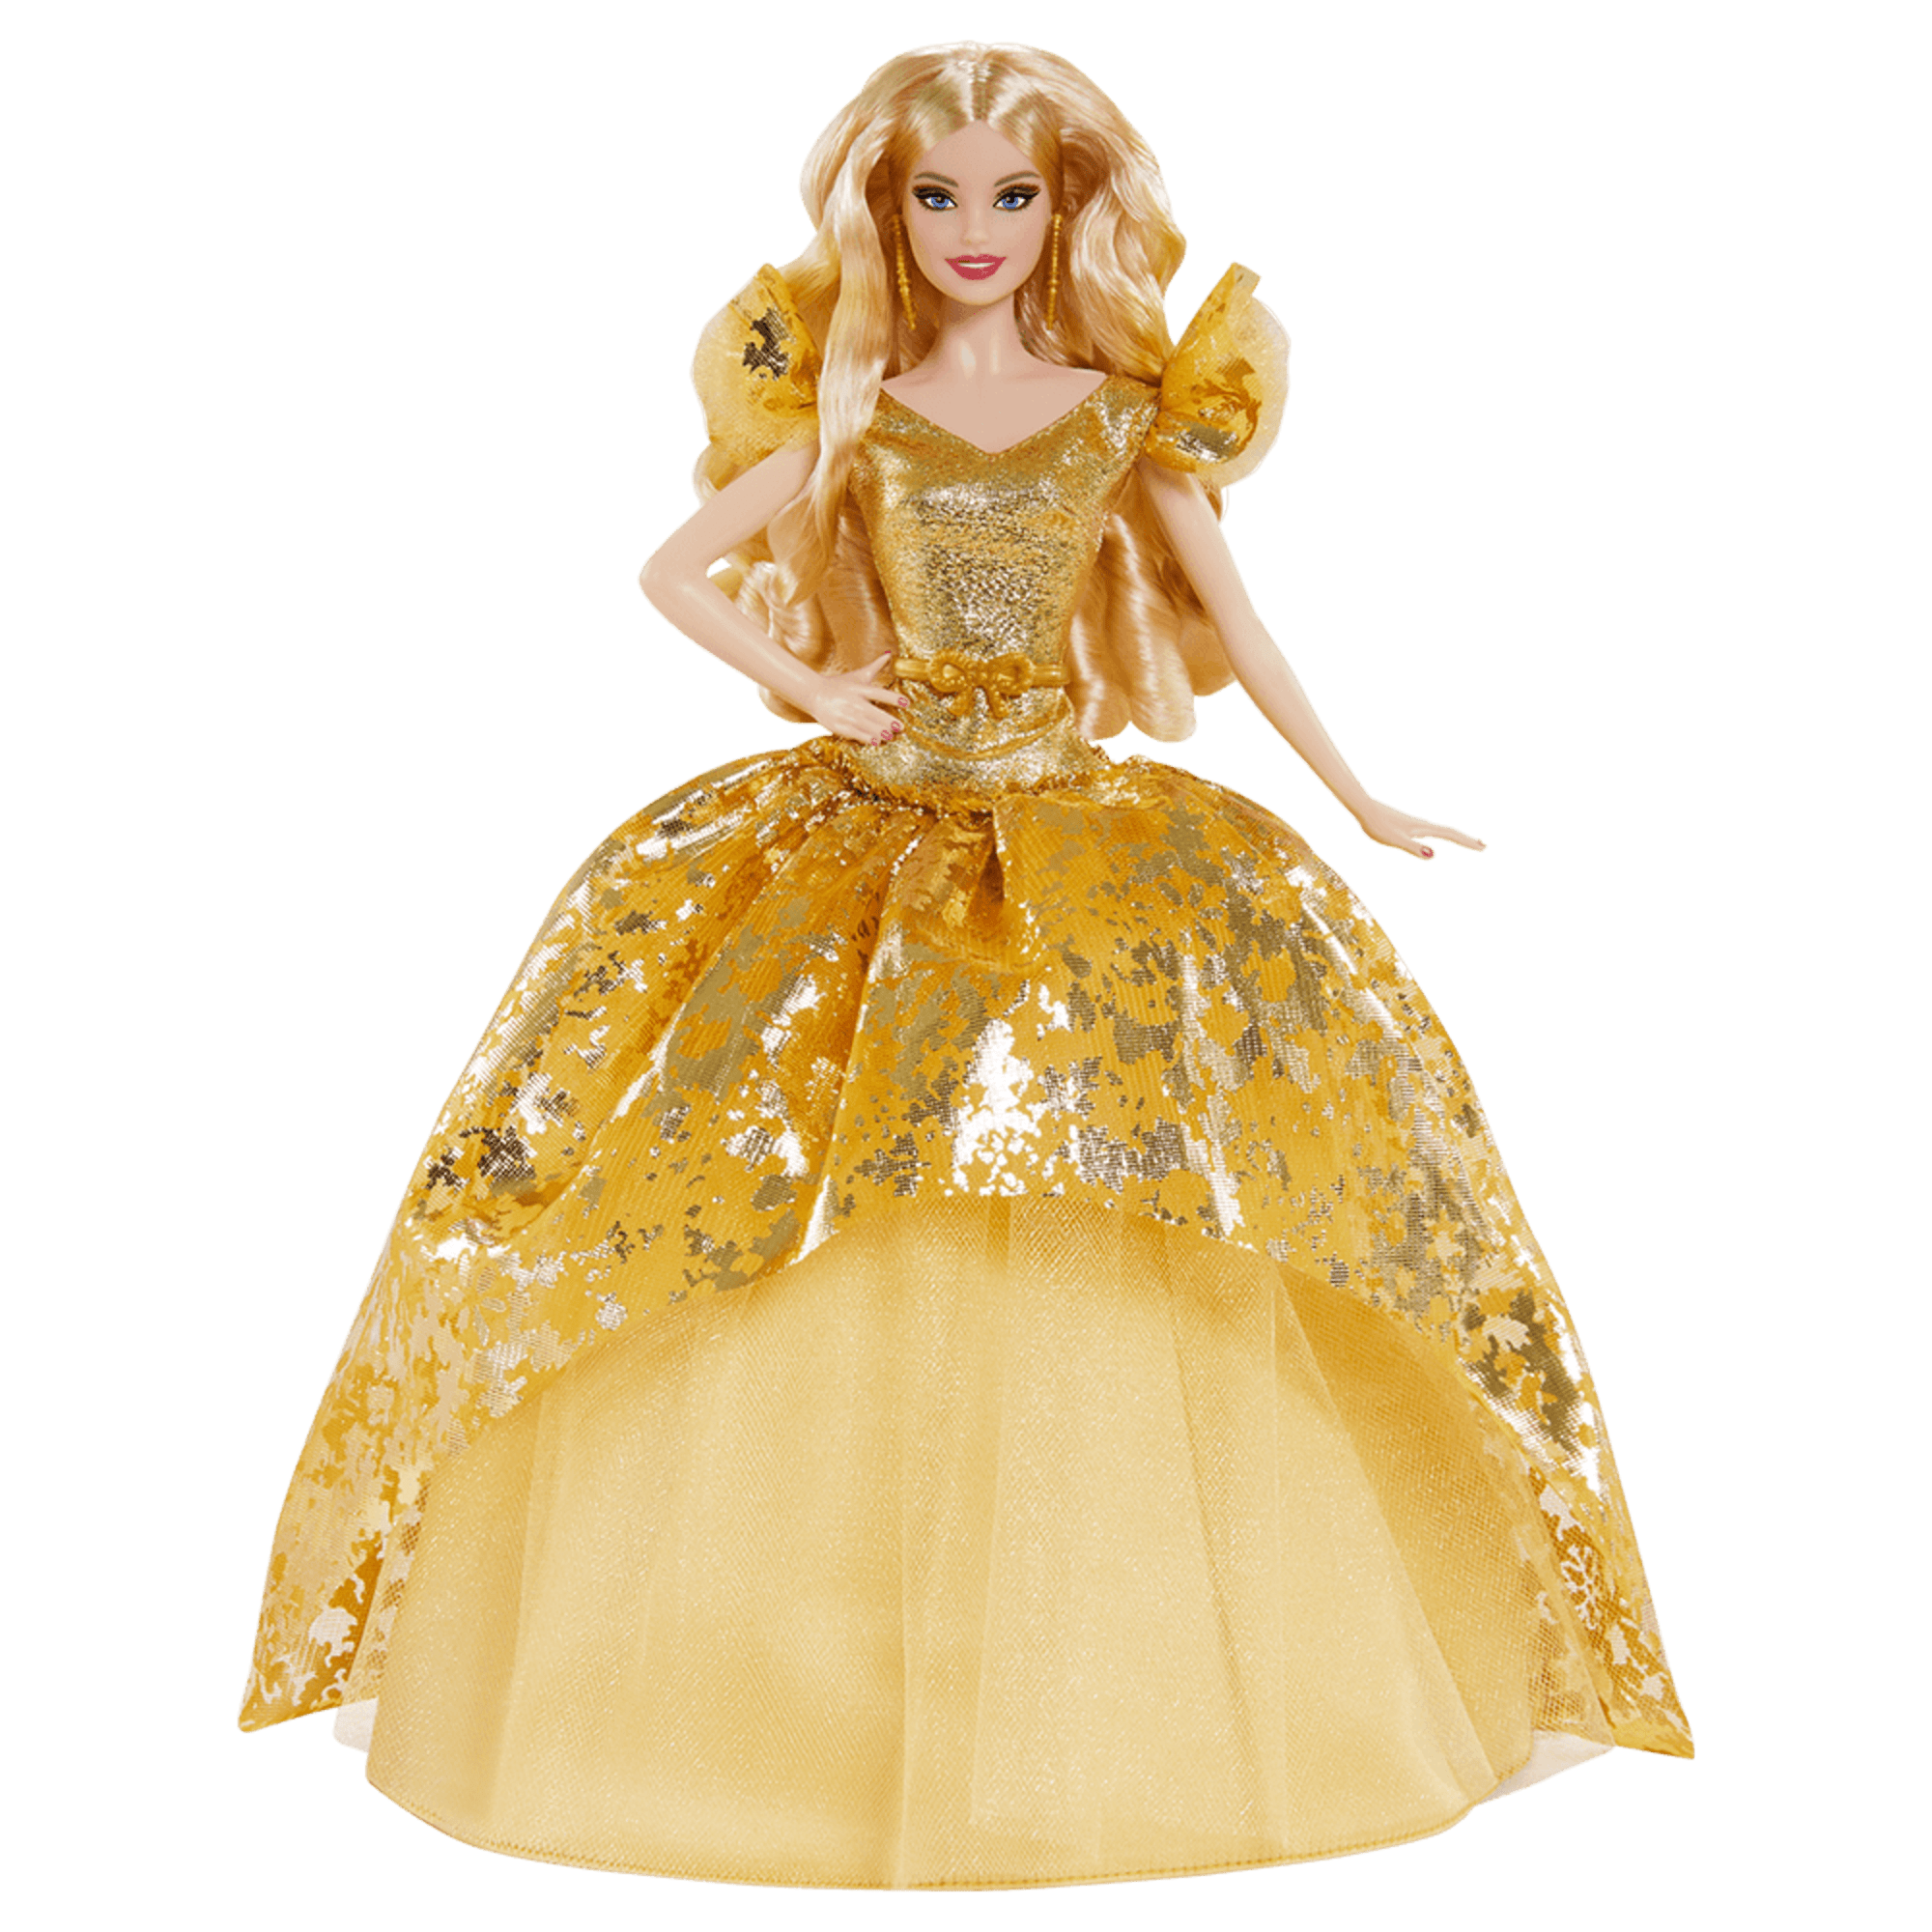 2020 Holiday Barbie Doll, Blonde Long Hair